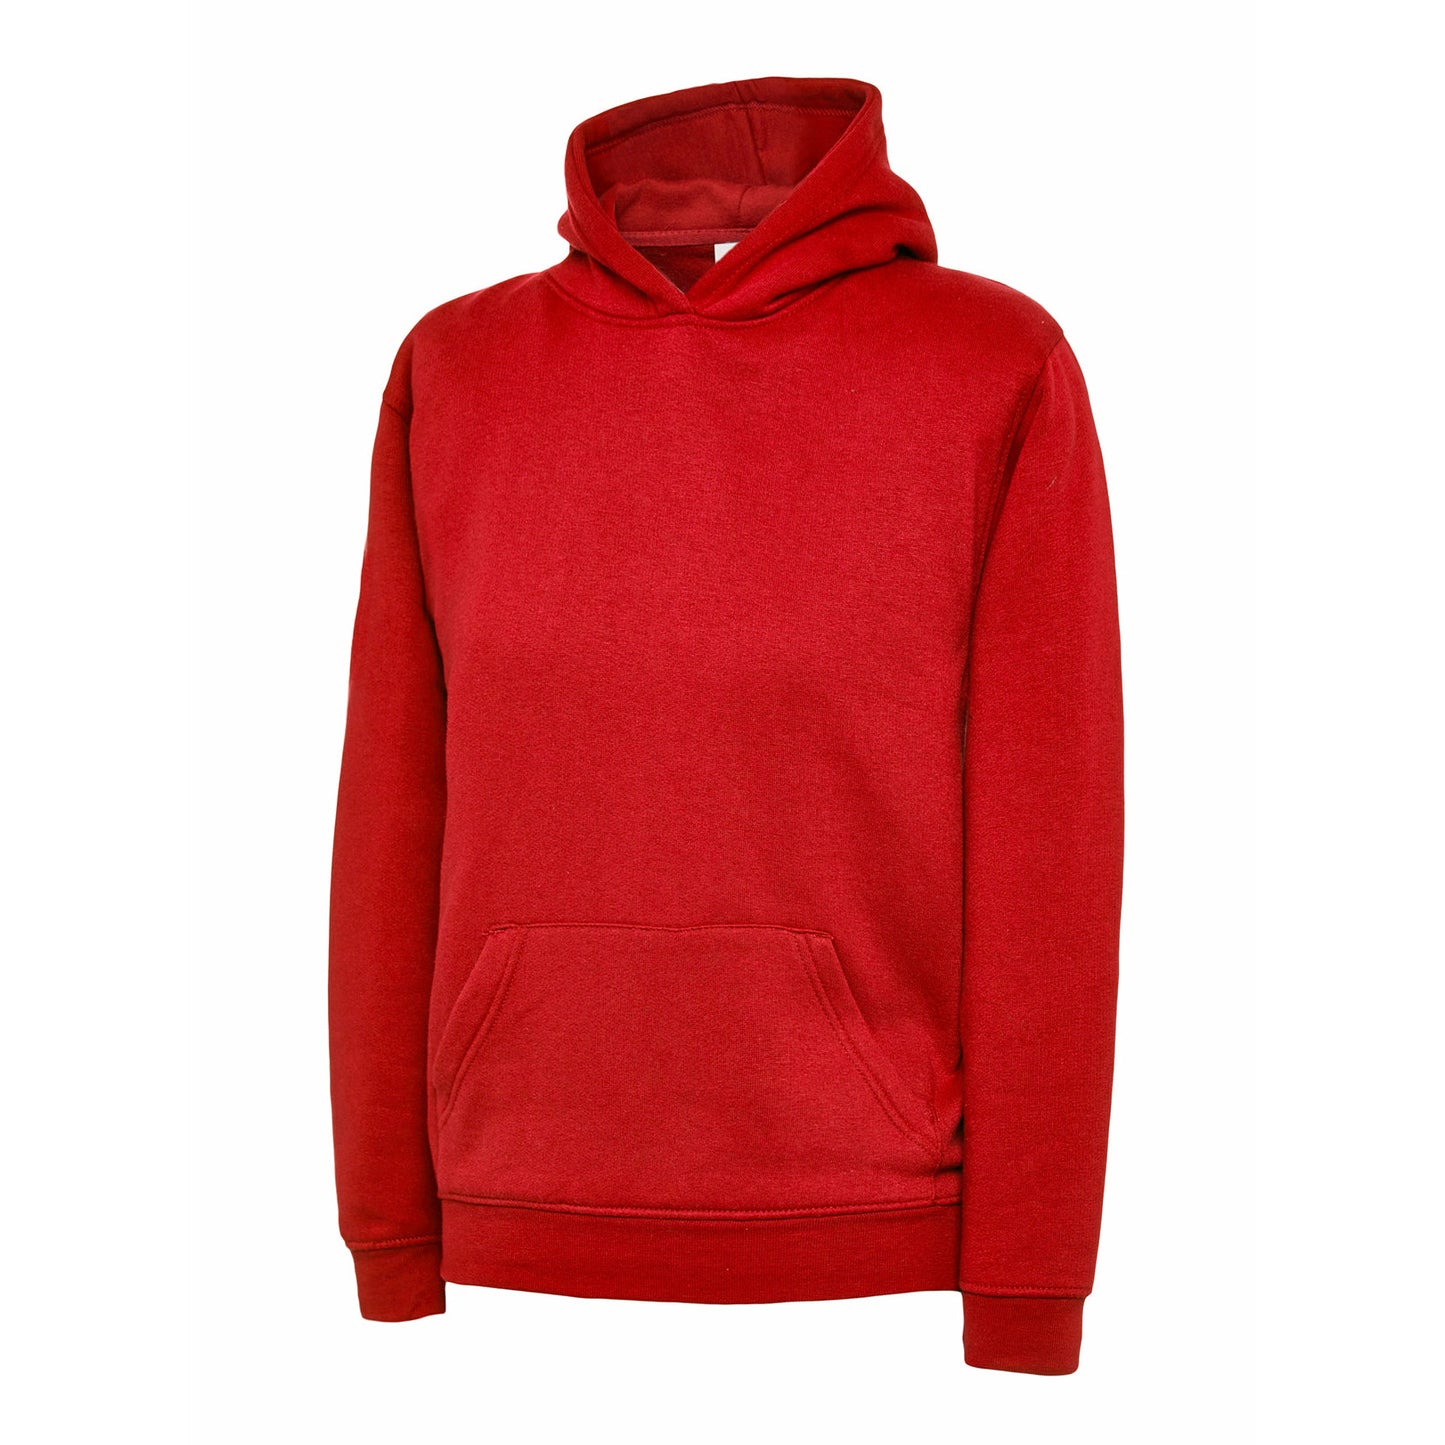 The UX Children’s Hooded Sweatshirt - Red